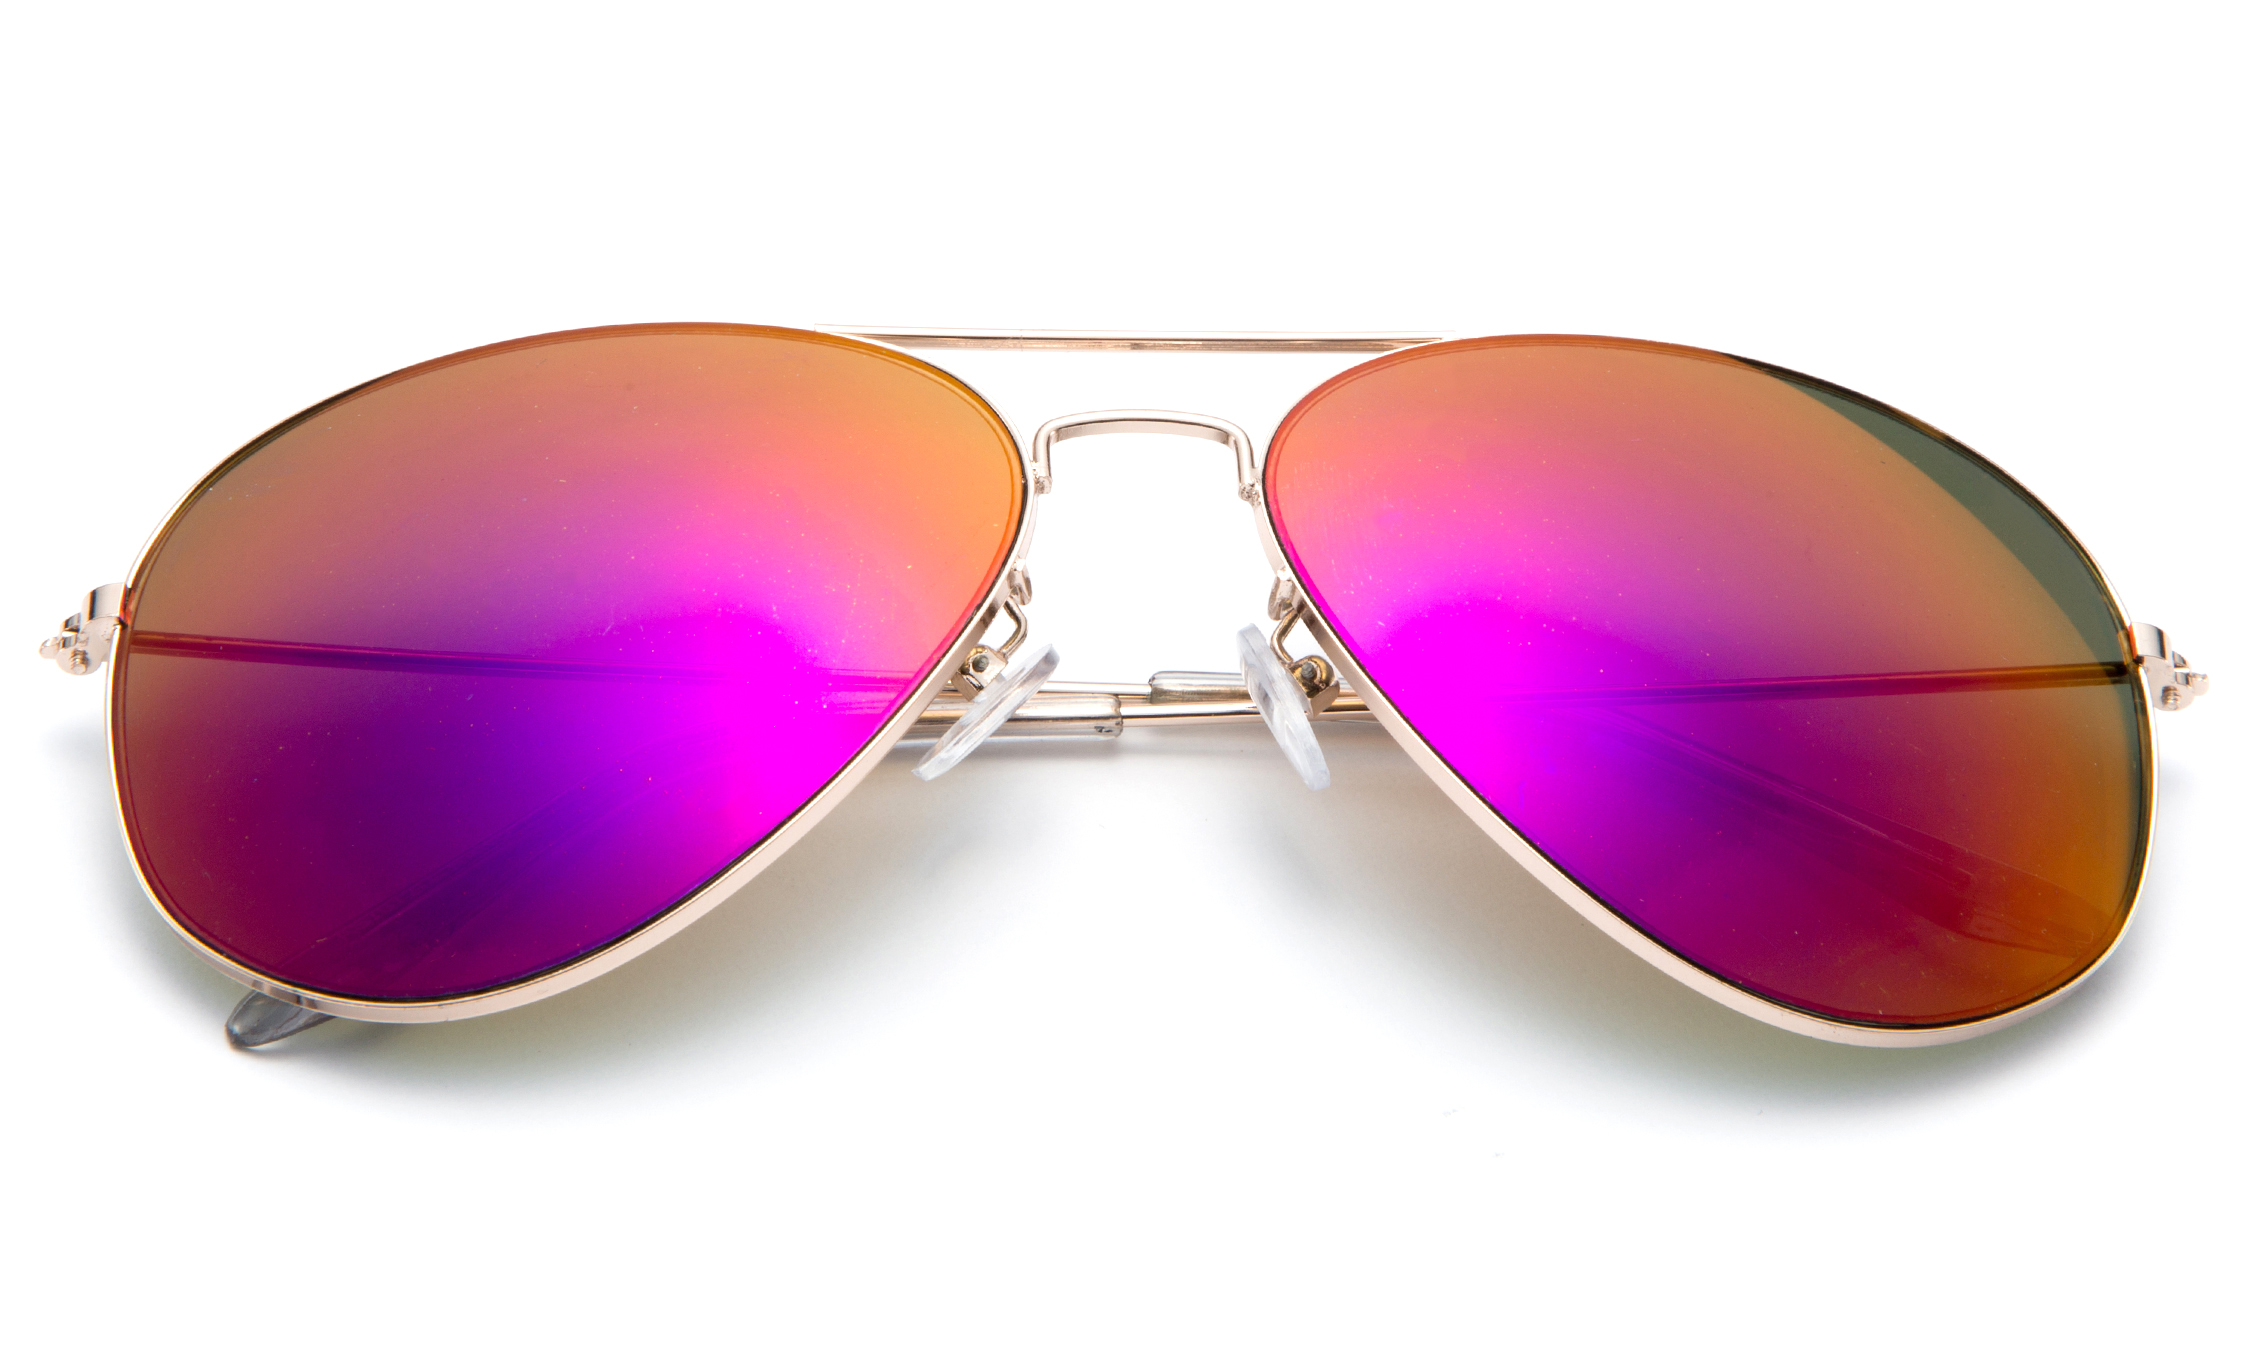 Newbee Fashion- Classic Aviator Sunglasses Flash Full Mirror lenses Slim Frame Super Light Weight for Men Women Clear Tip UV Protection - image 2 of 2